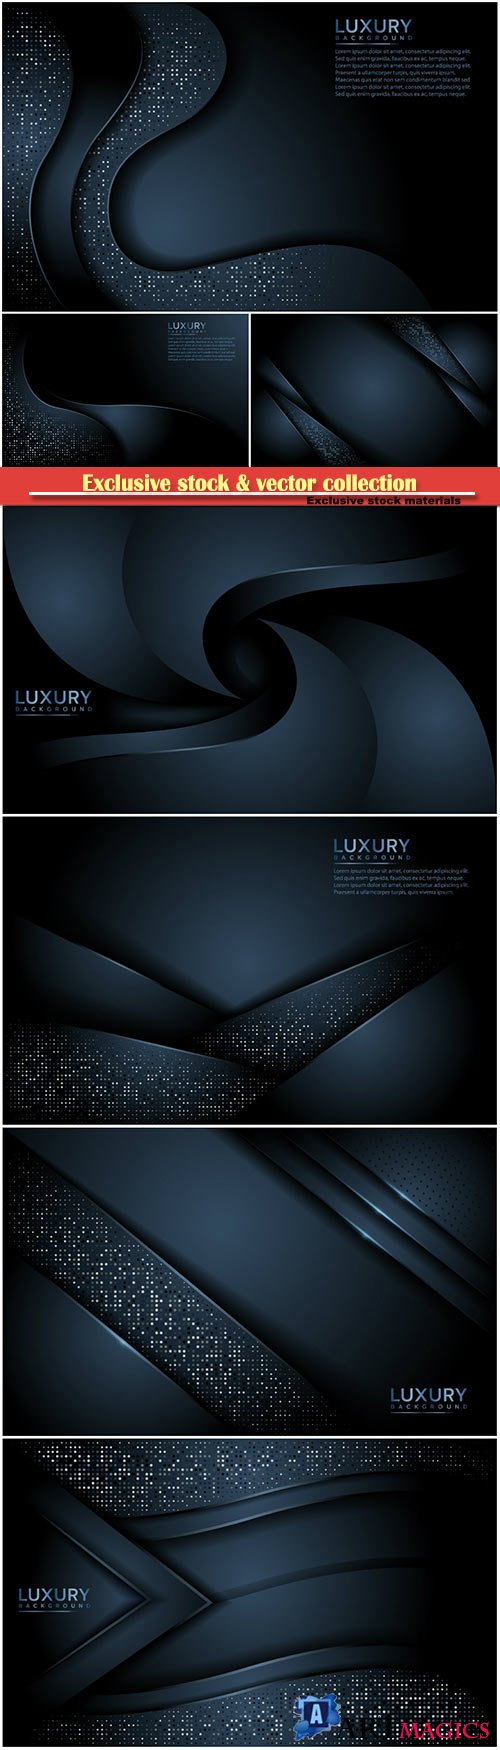 Dark luxury background with overlap layer